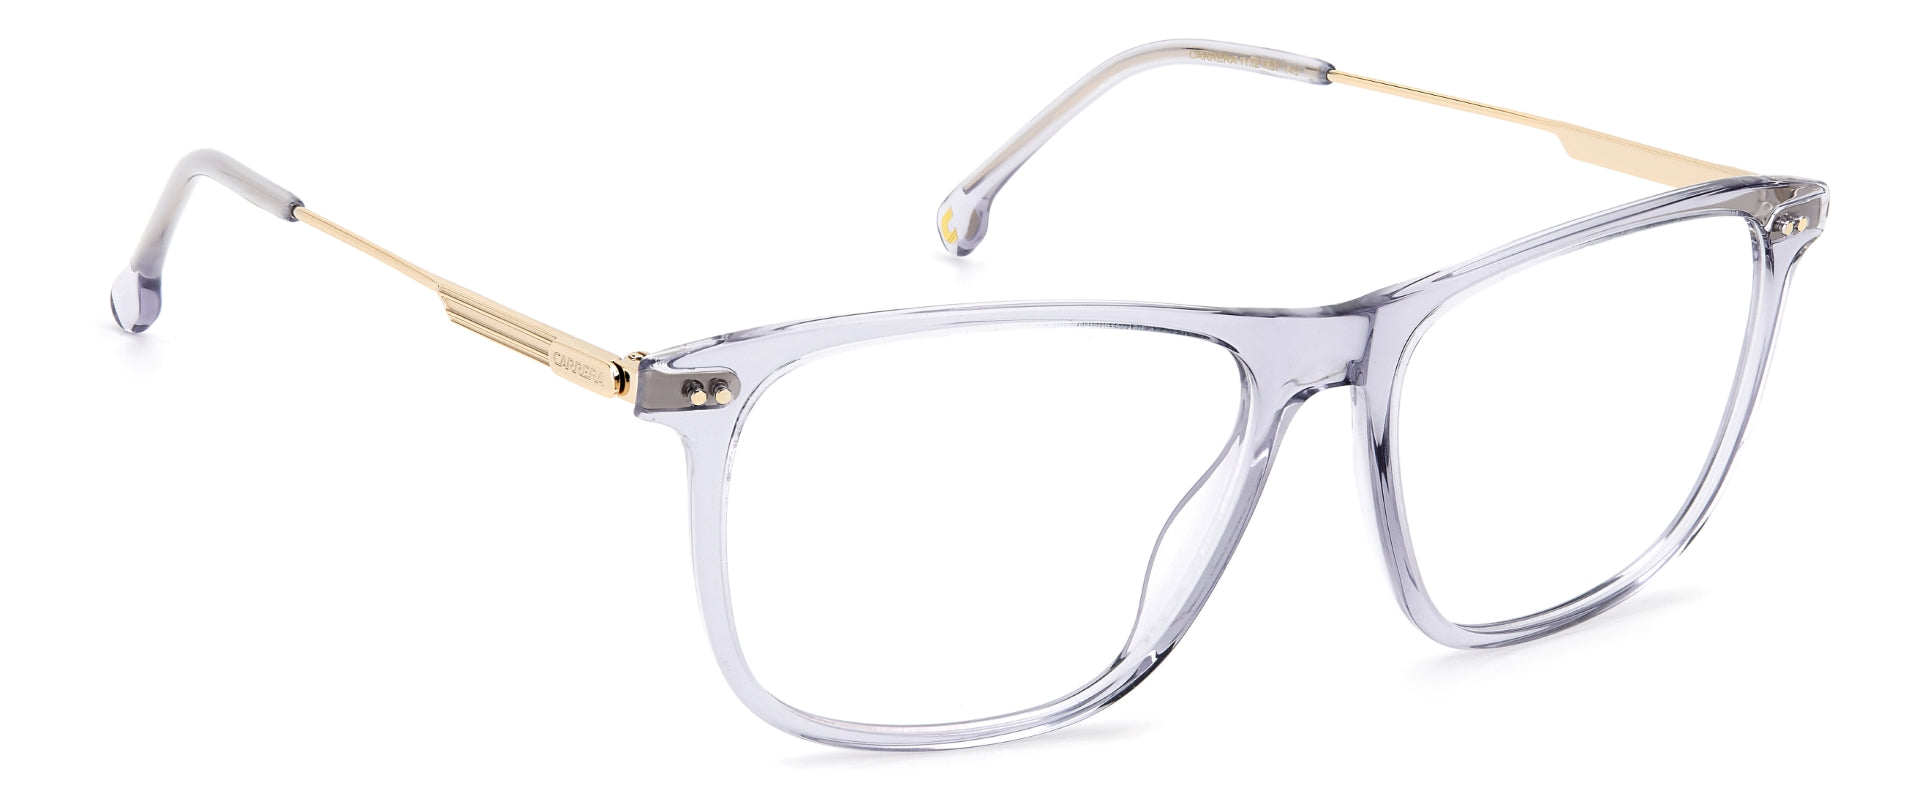 Carrera Rectangular Eyeglasses